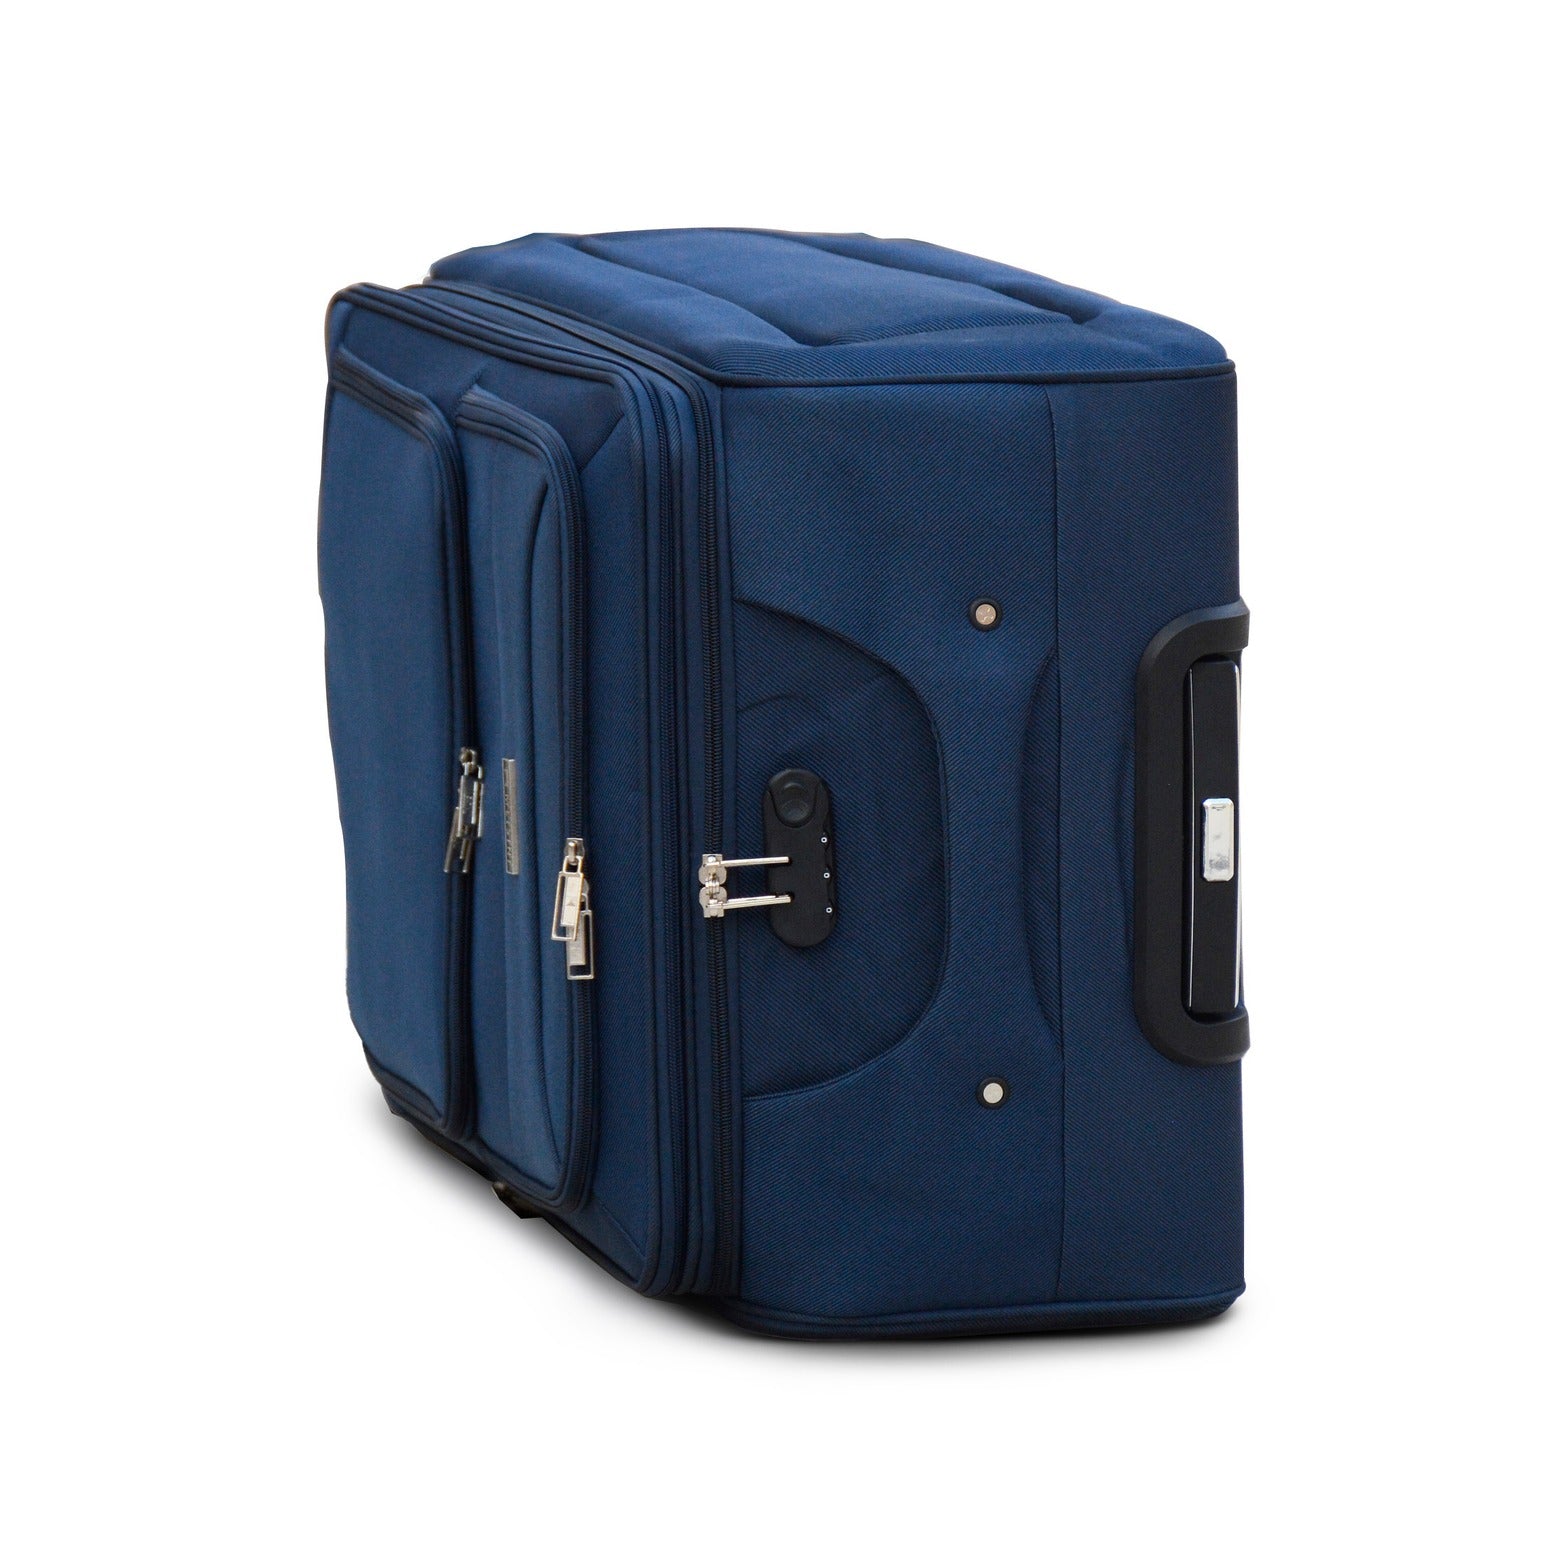 32" Blue Colour LP 2 Wheel 0161 Luggage Lightweight Soft Material Trolley Bag Zaappy.com